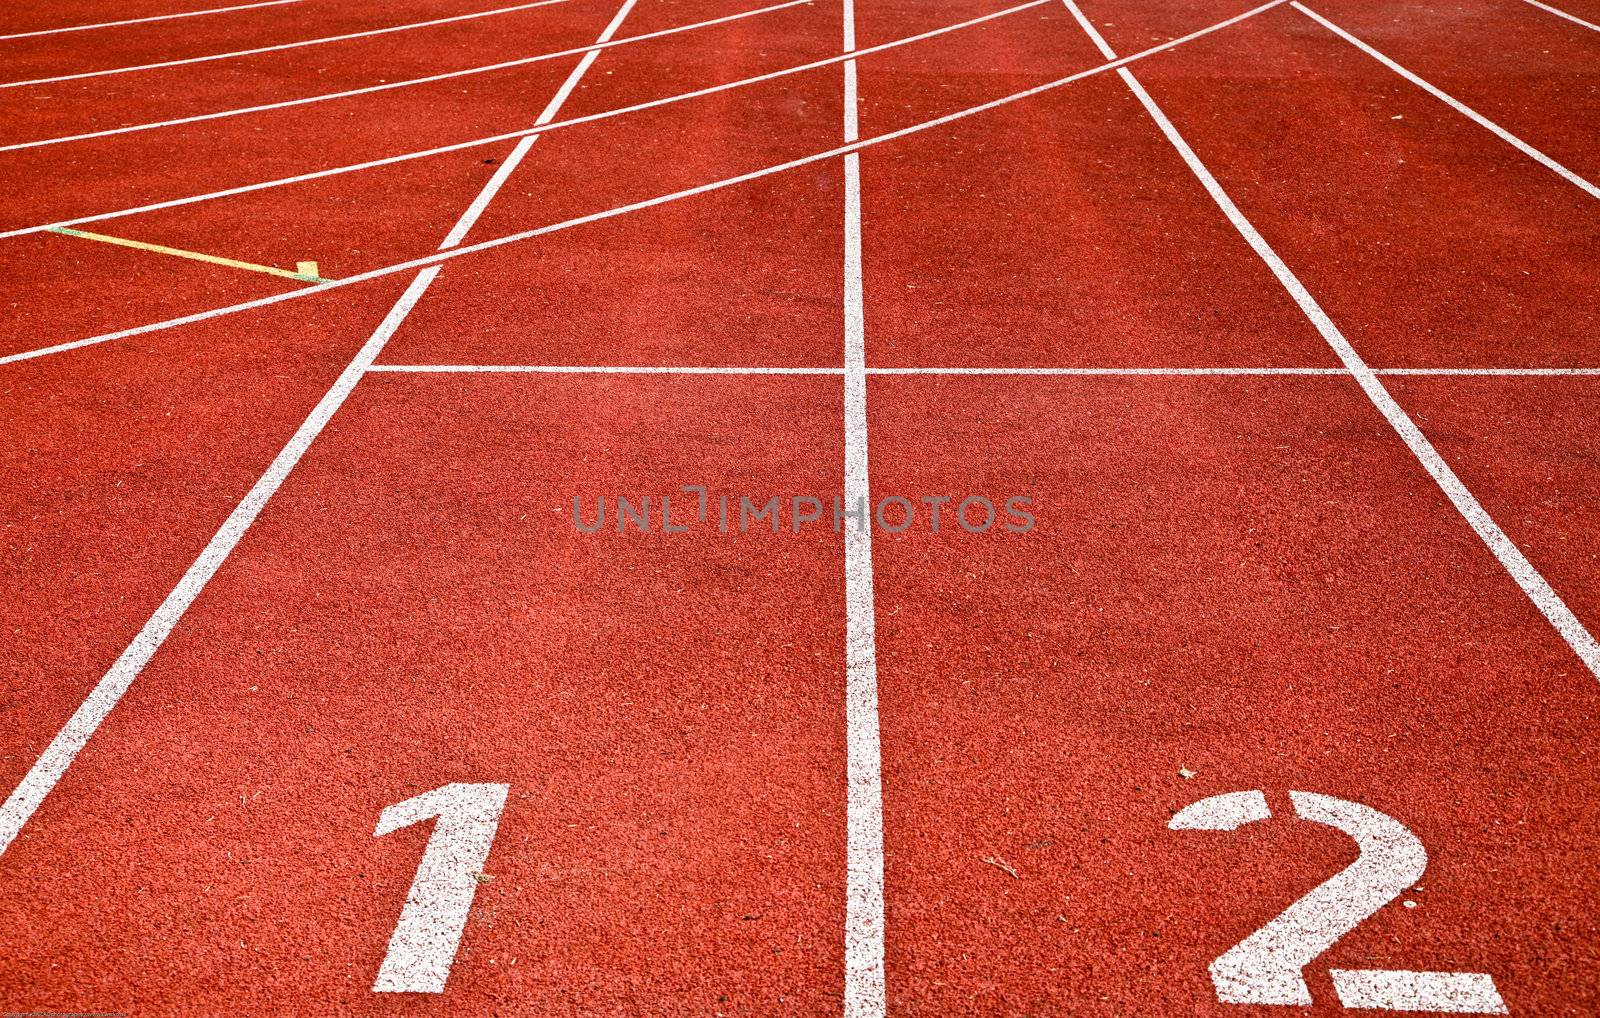 Photo Of Running Track Lanes On A Sports Stadium